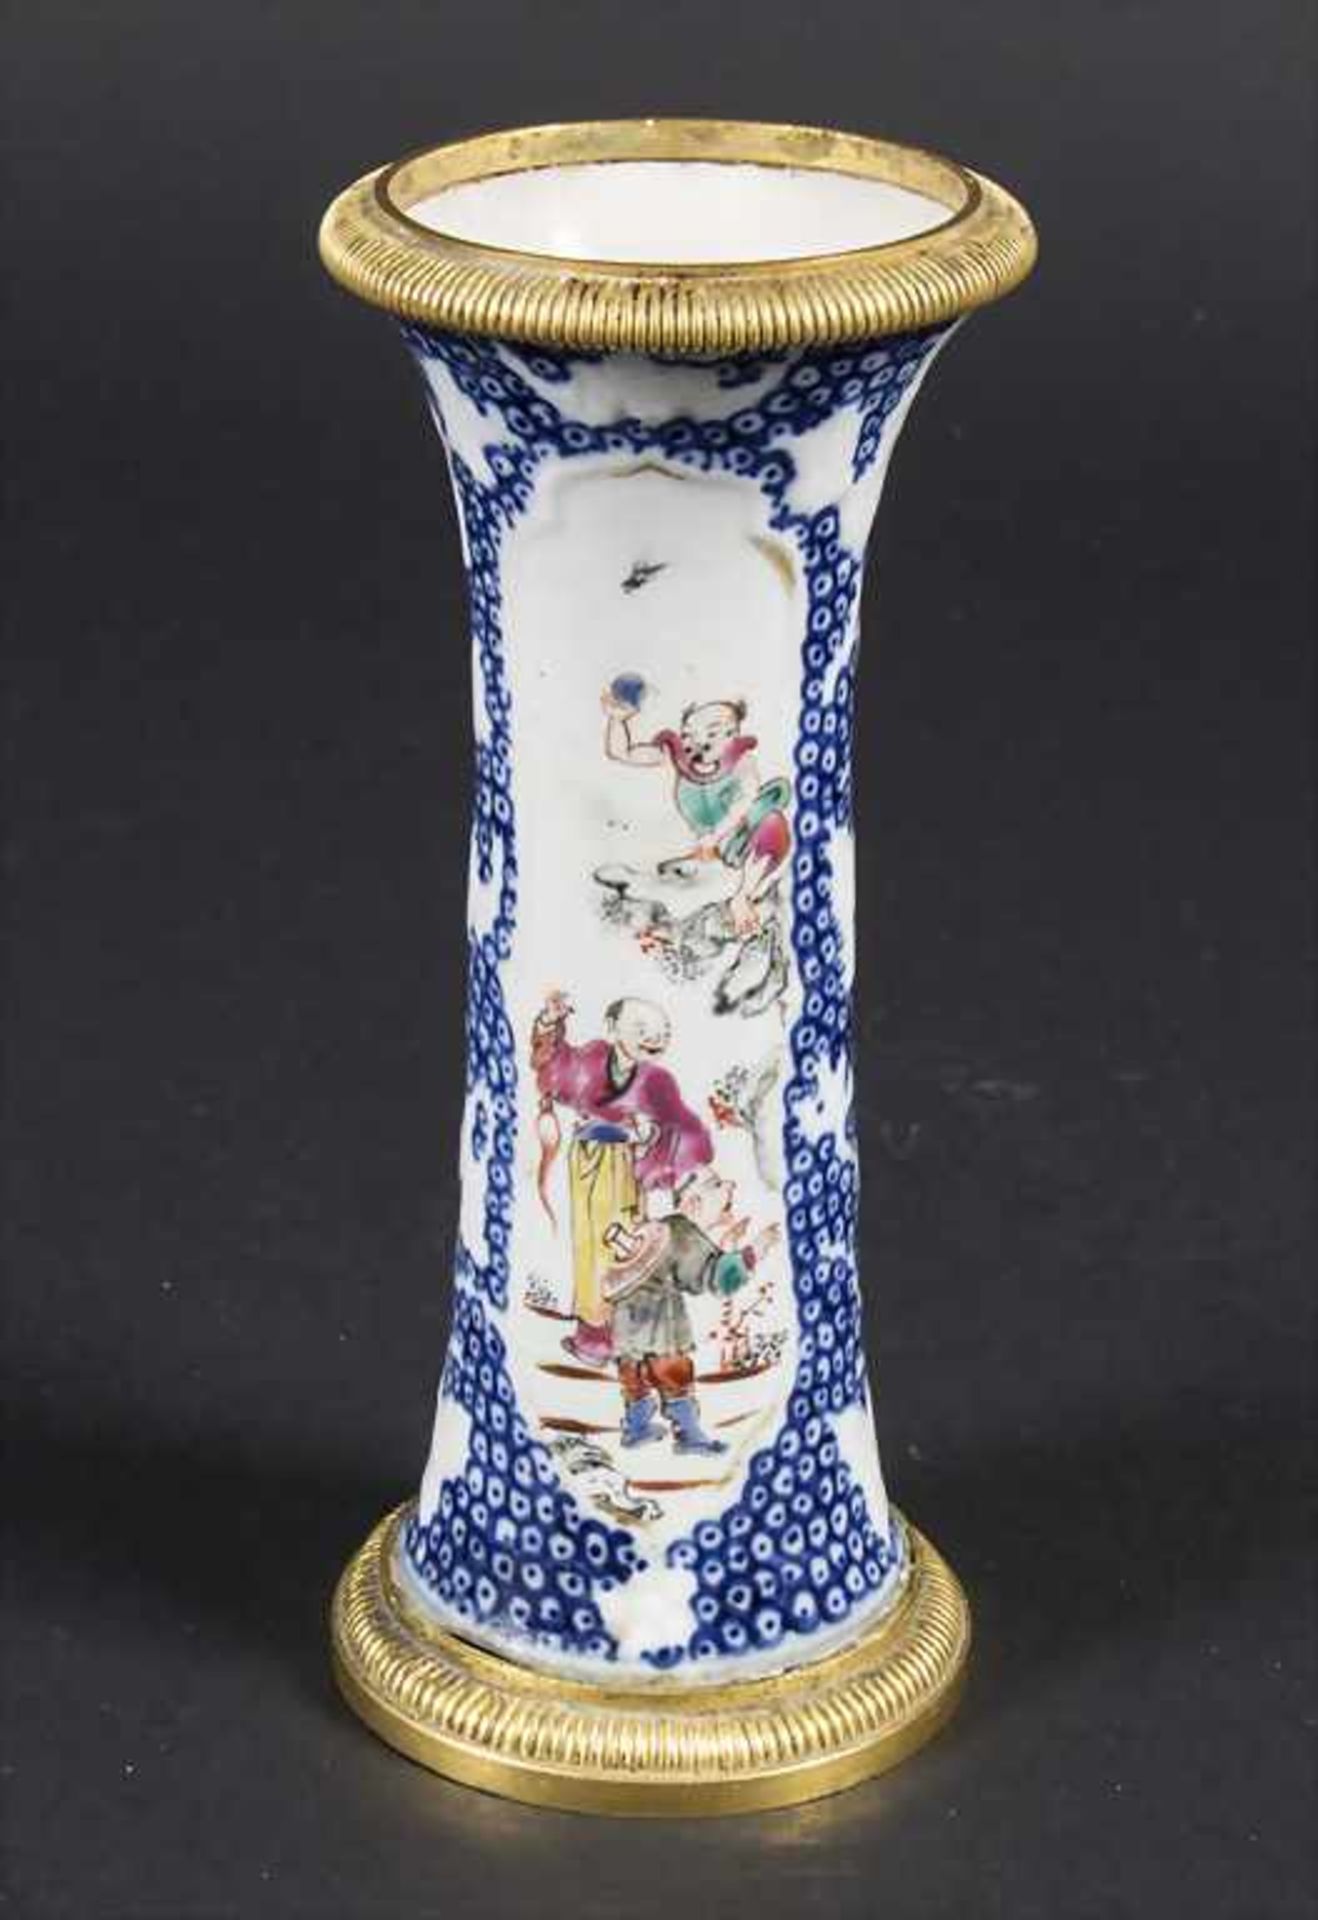 Ziervase / A decorative porcelain vase, China, Qing Dynastie (1644-1911), 18. Jh.